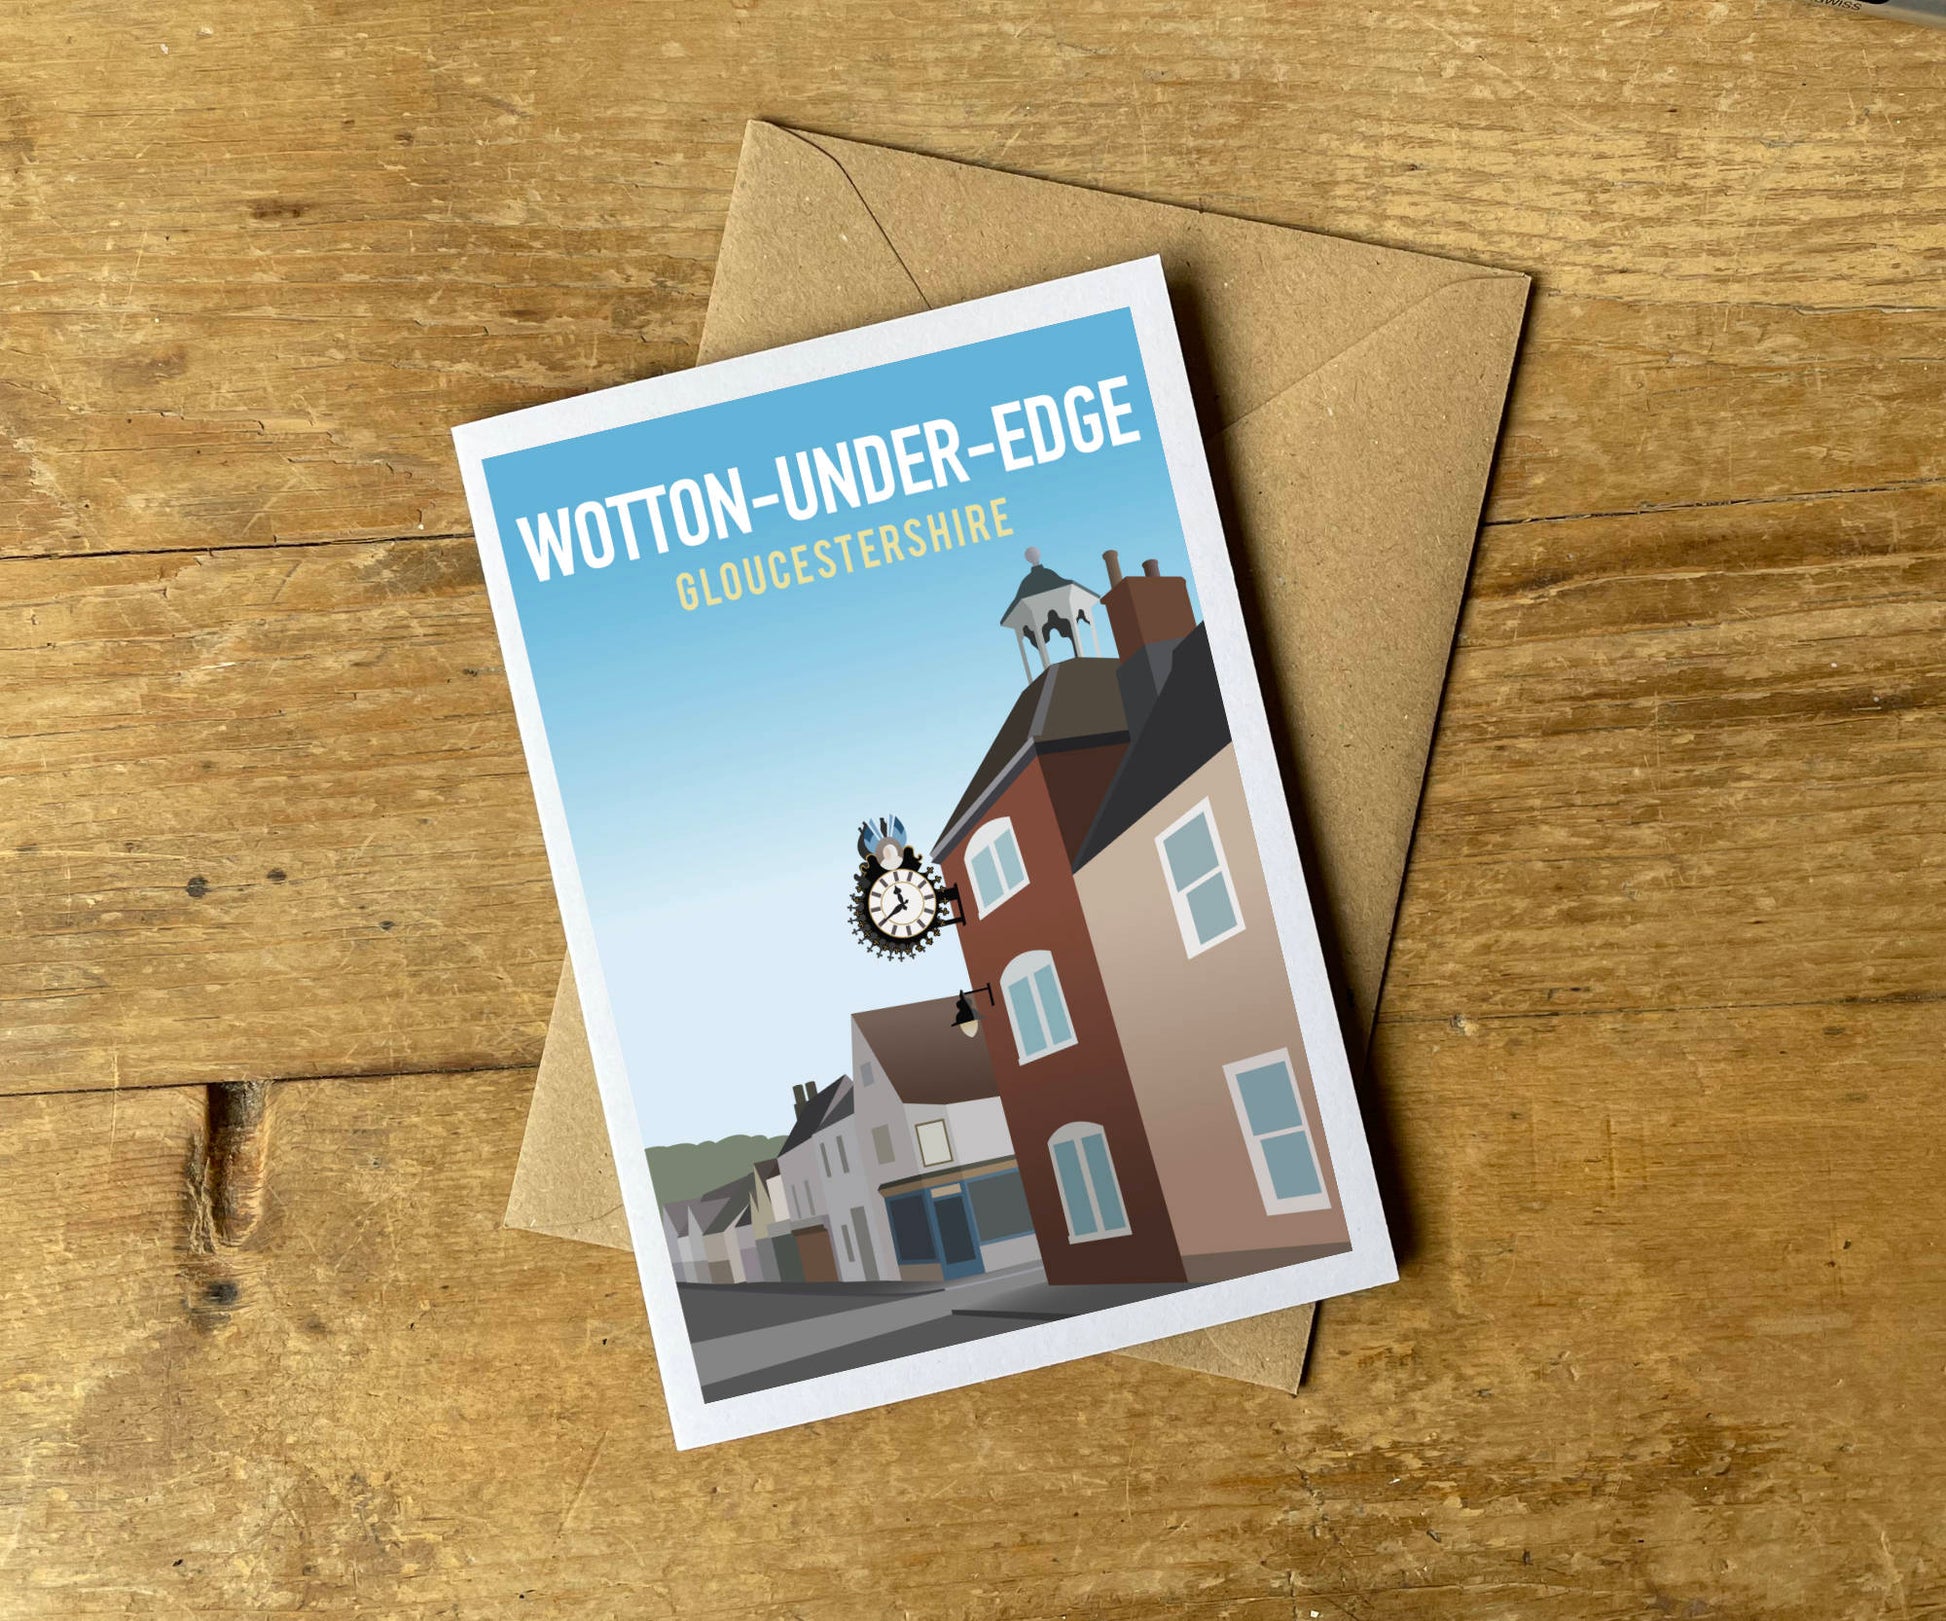 Wotton-under-Edge Greeting Card retro design